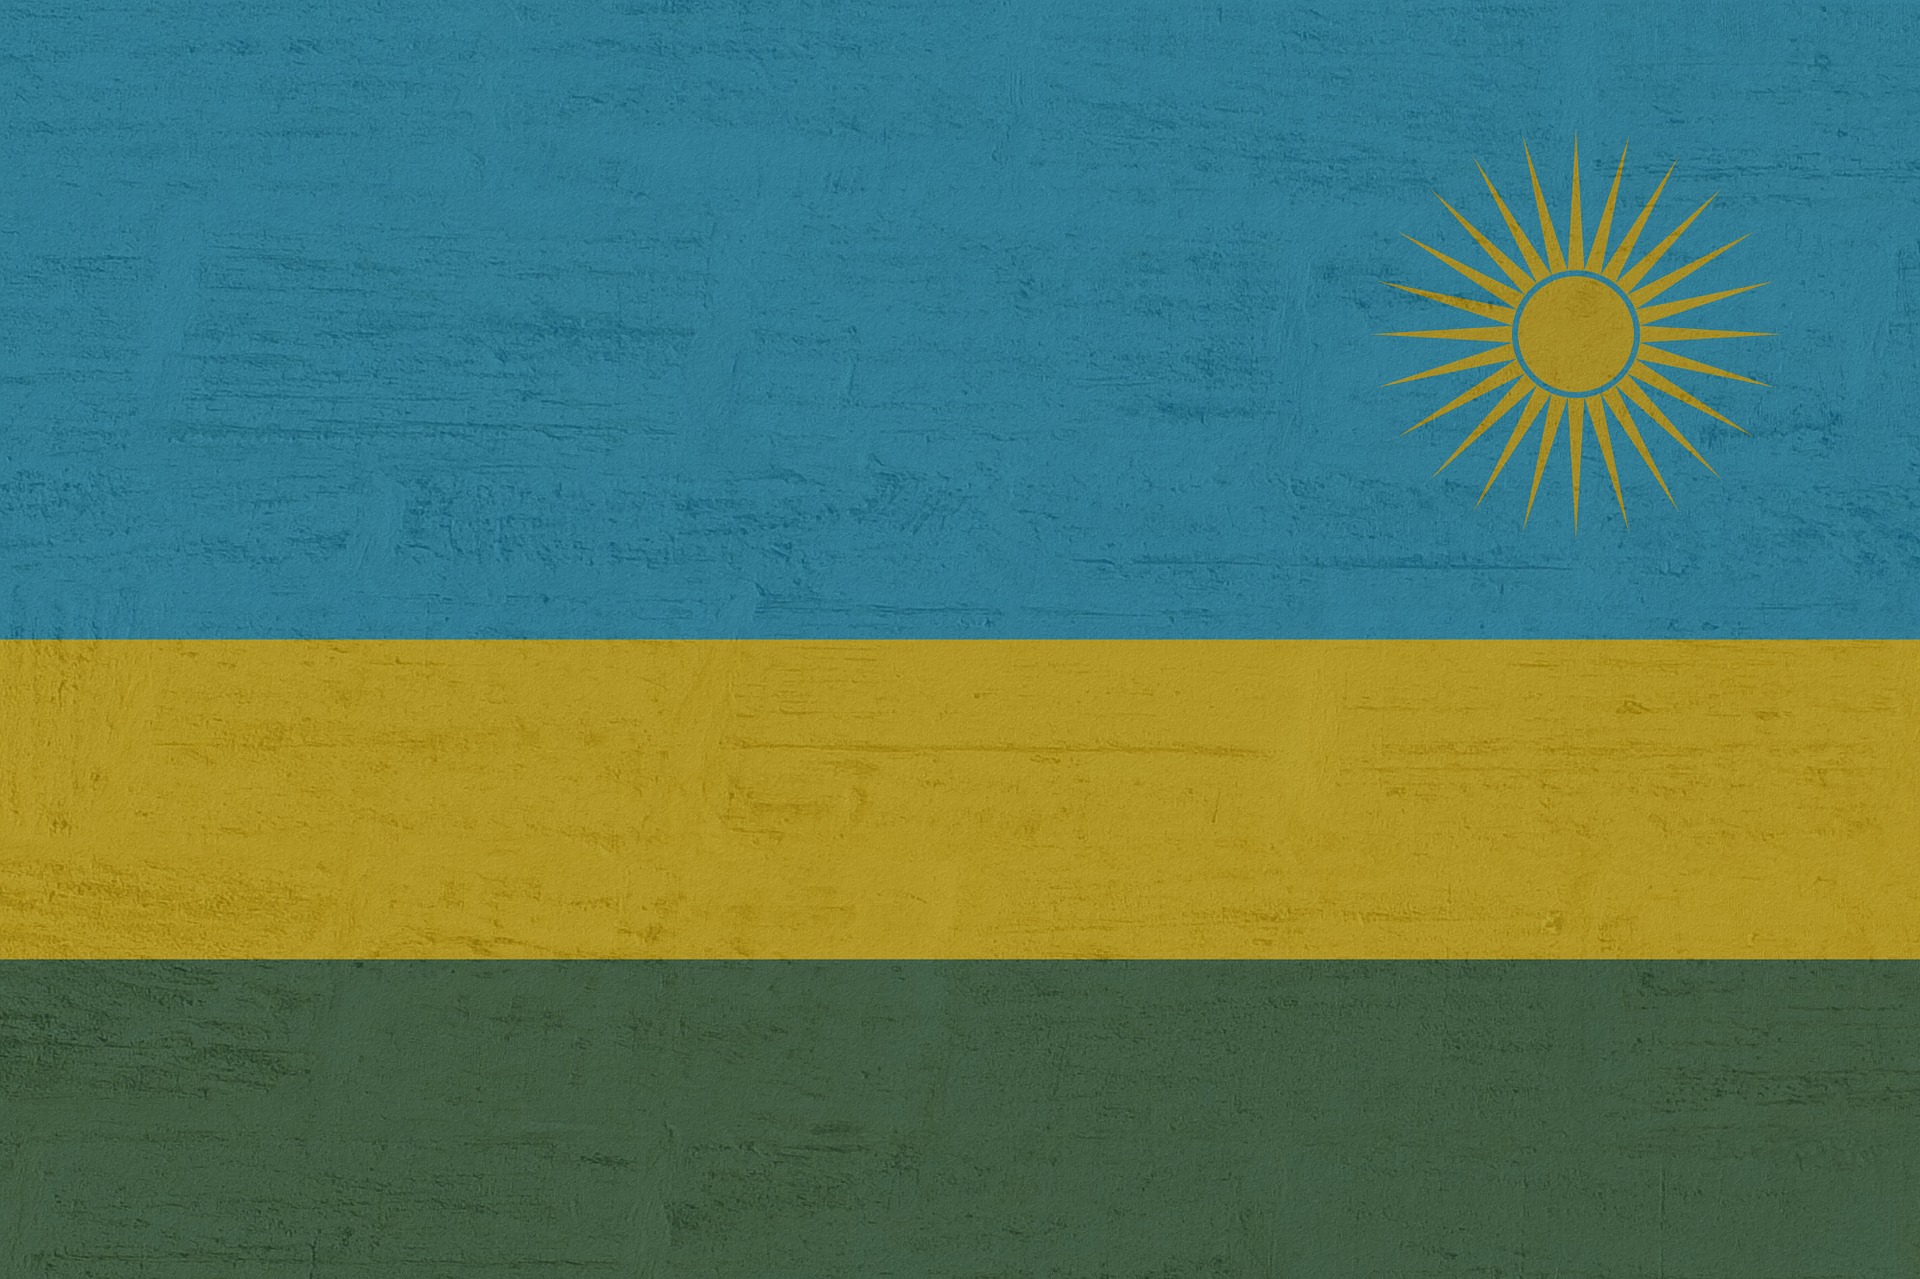 ruanda_flag.jpg